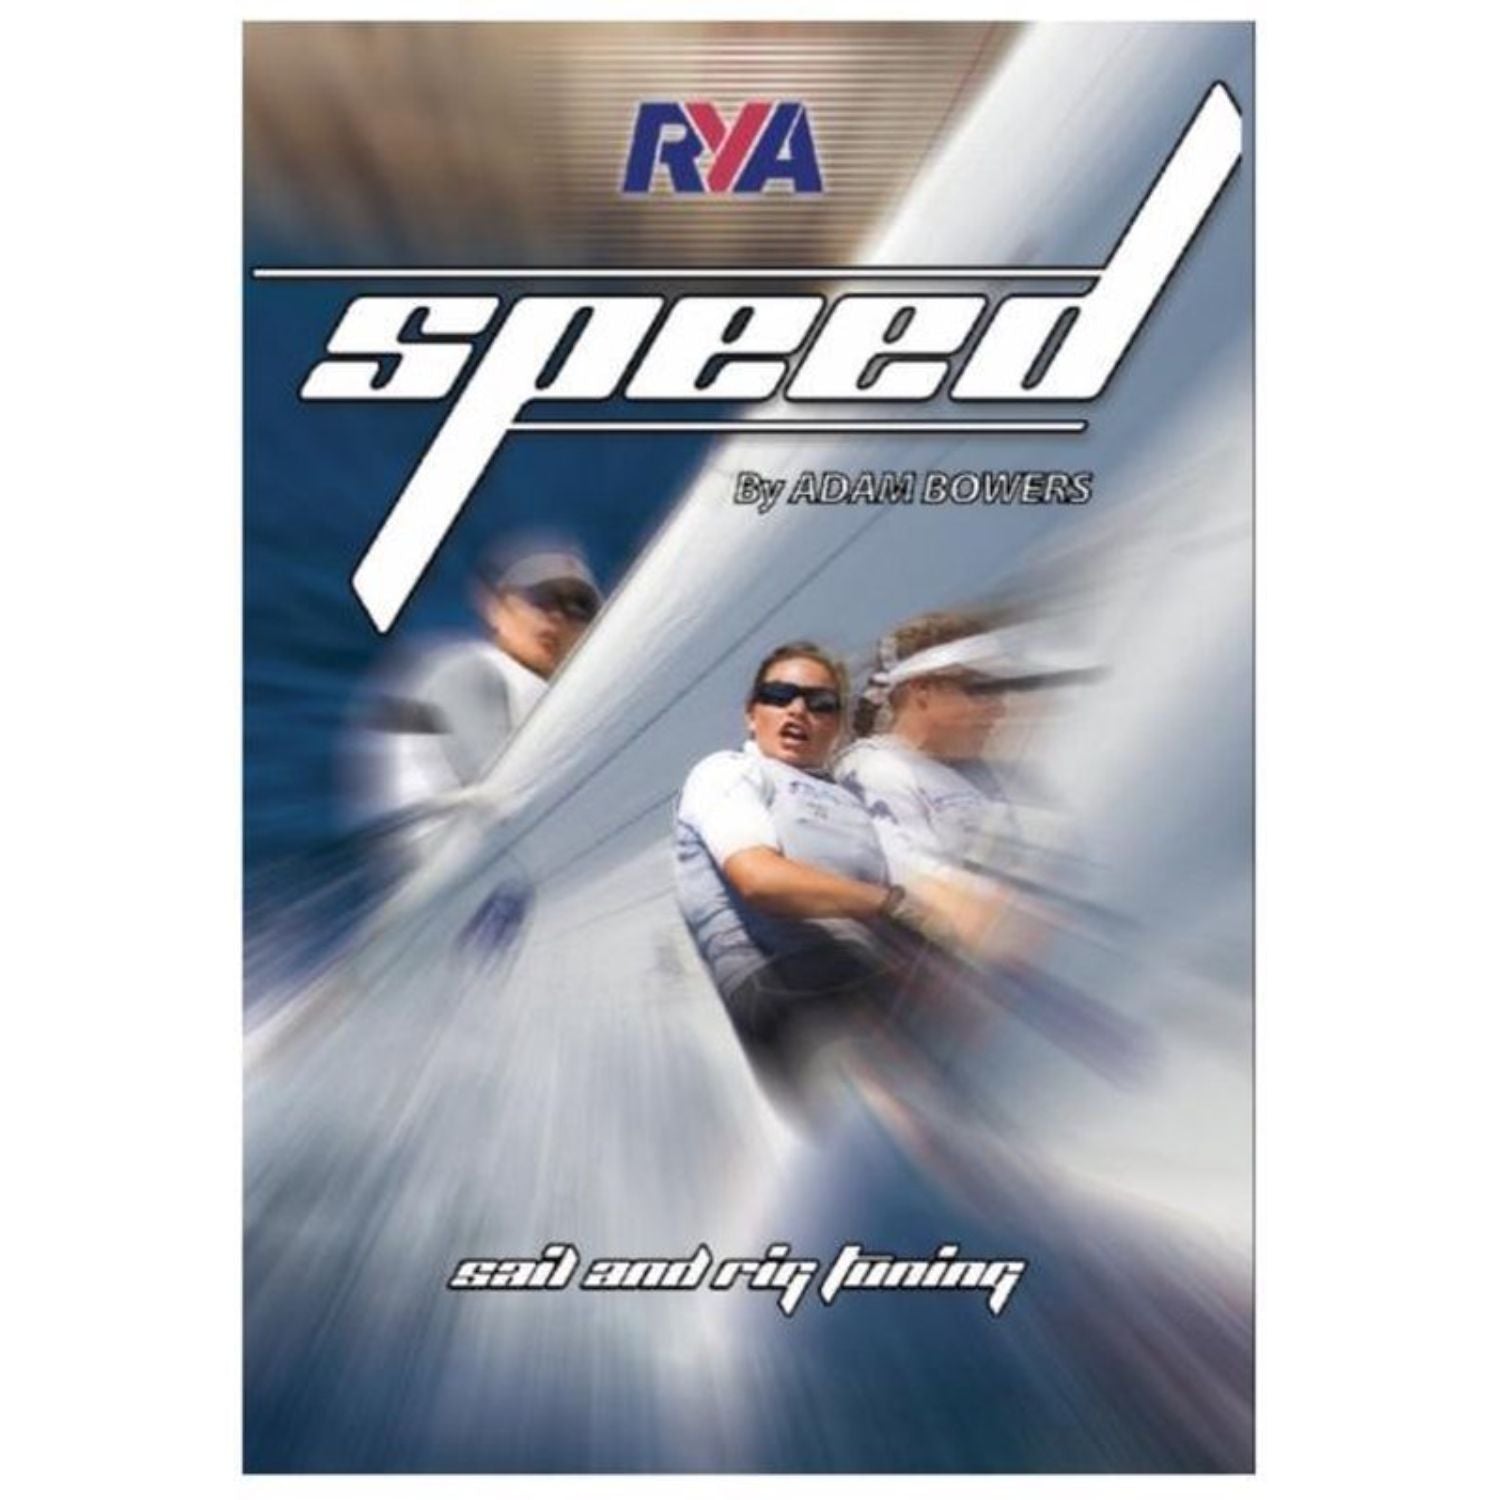 RYA Speed Sail Rig Tuning DVD